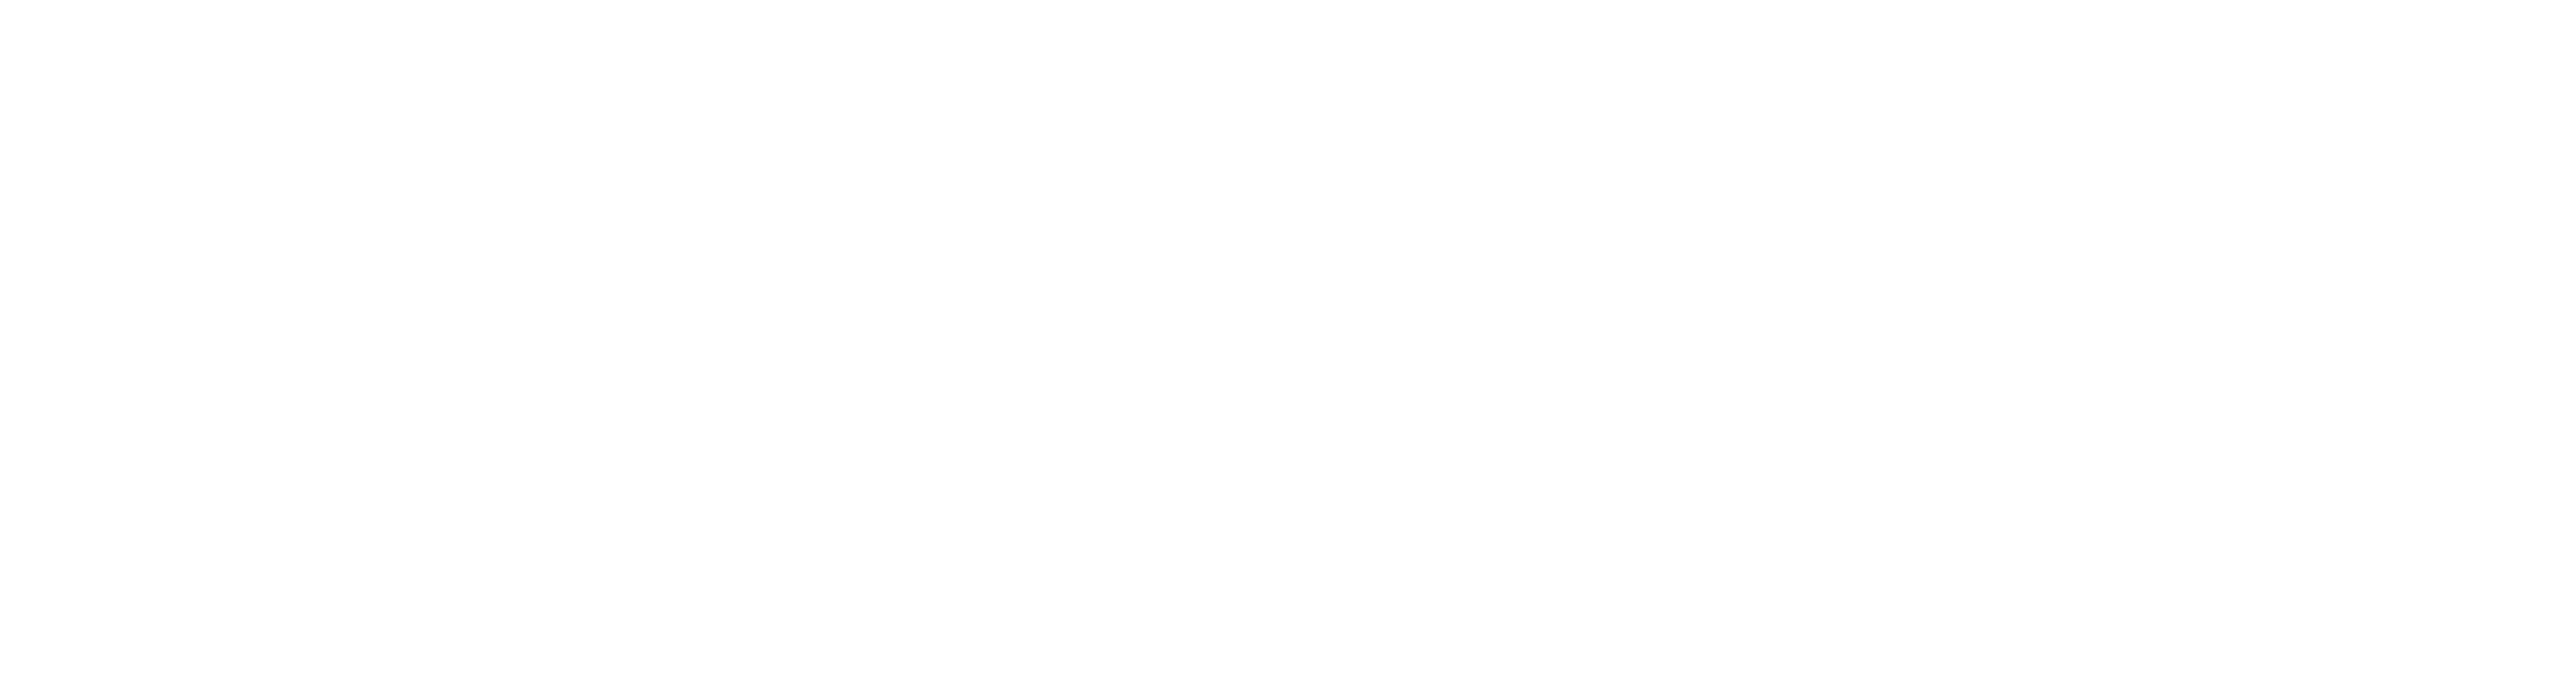 savana-signatures-logo-white